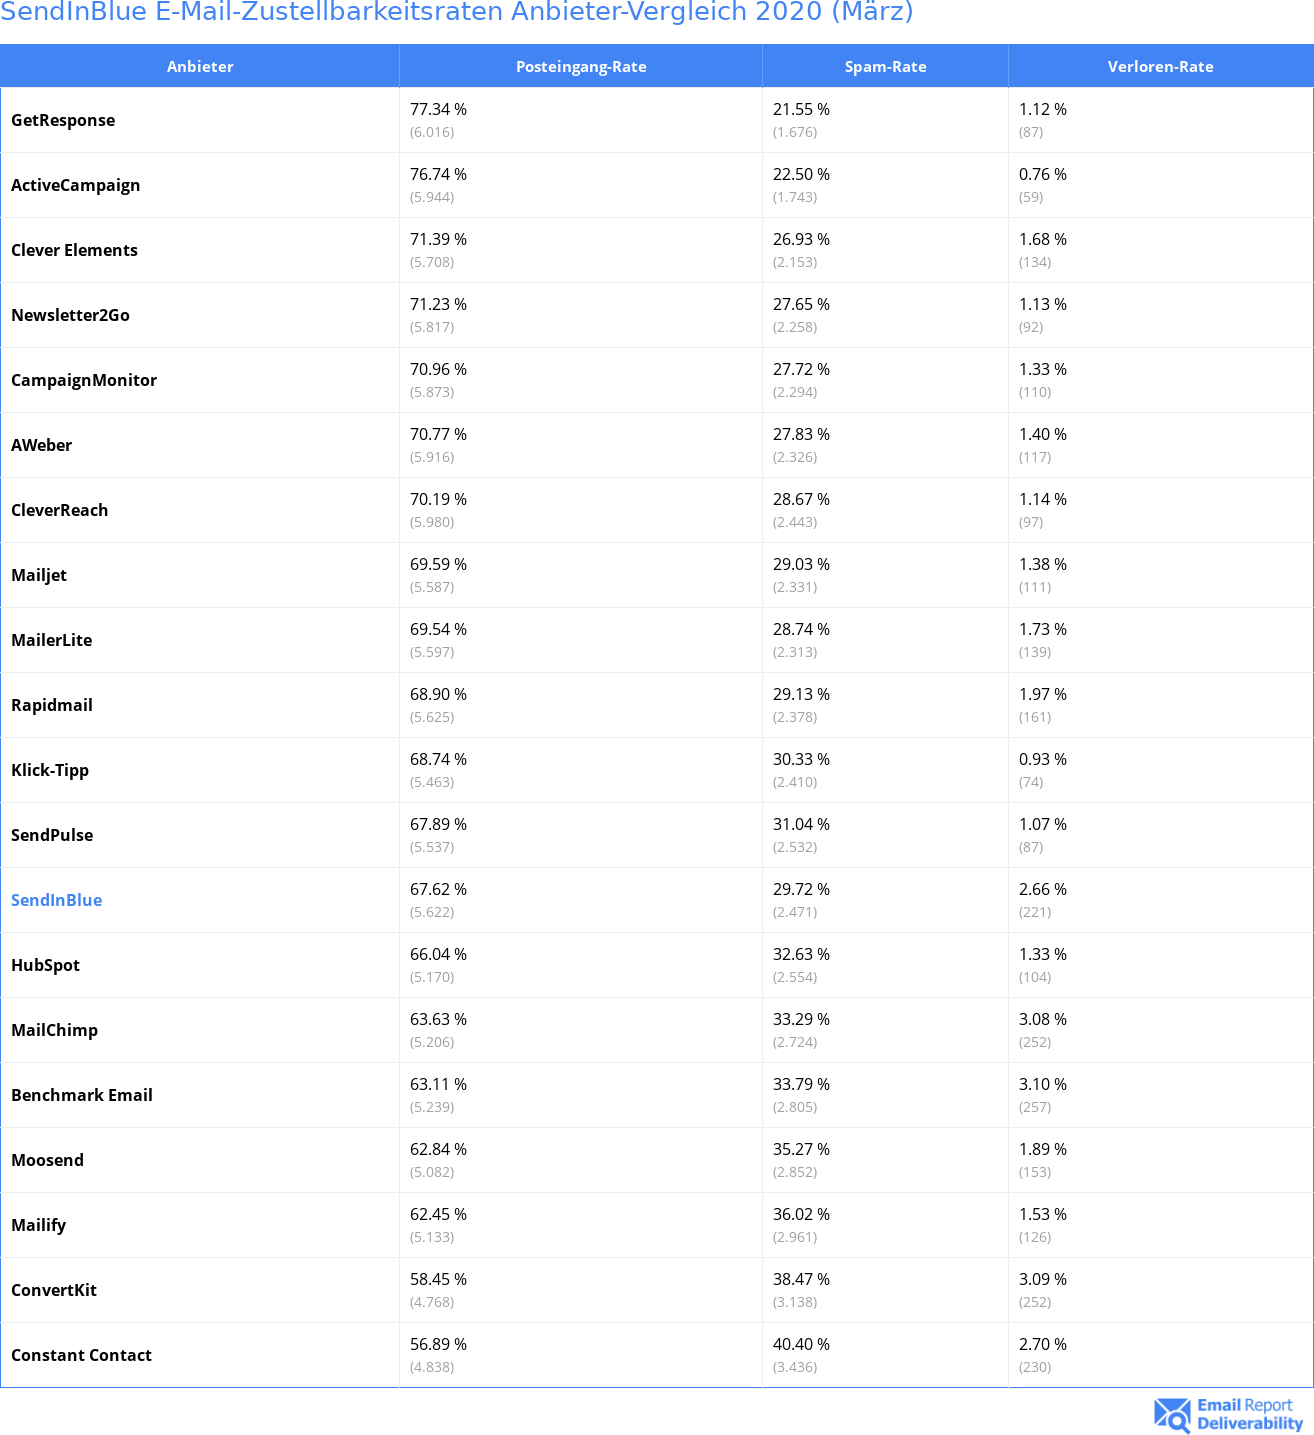 SendInBlue E-Mail-Zustellbarkeitsraten Anbieter-Vergleich 2020 (März)